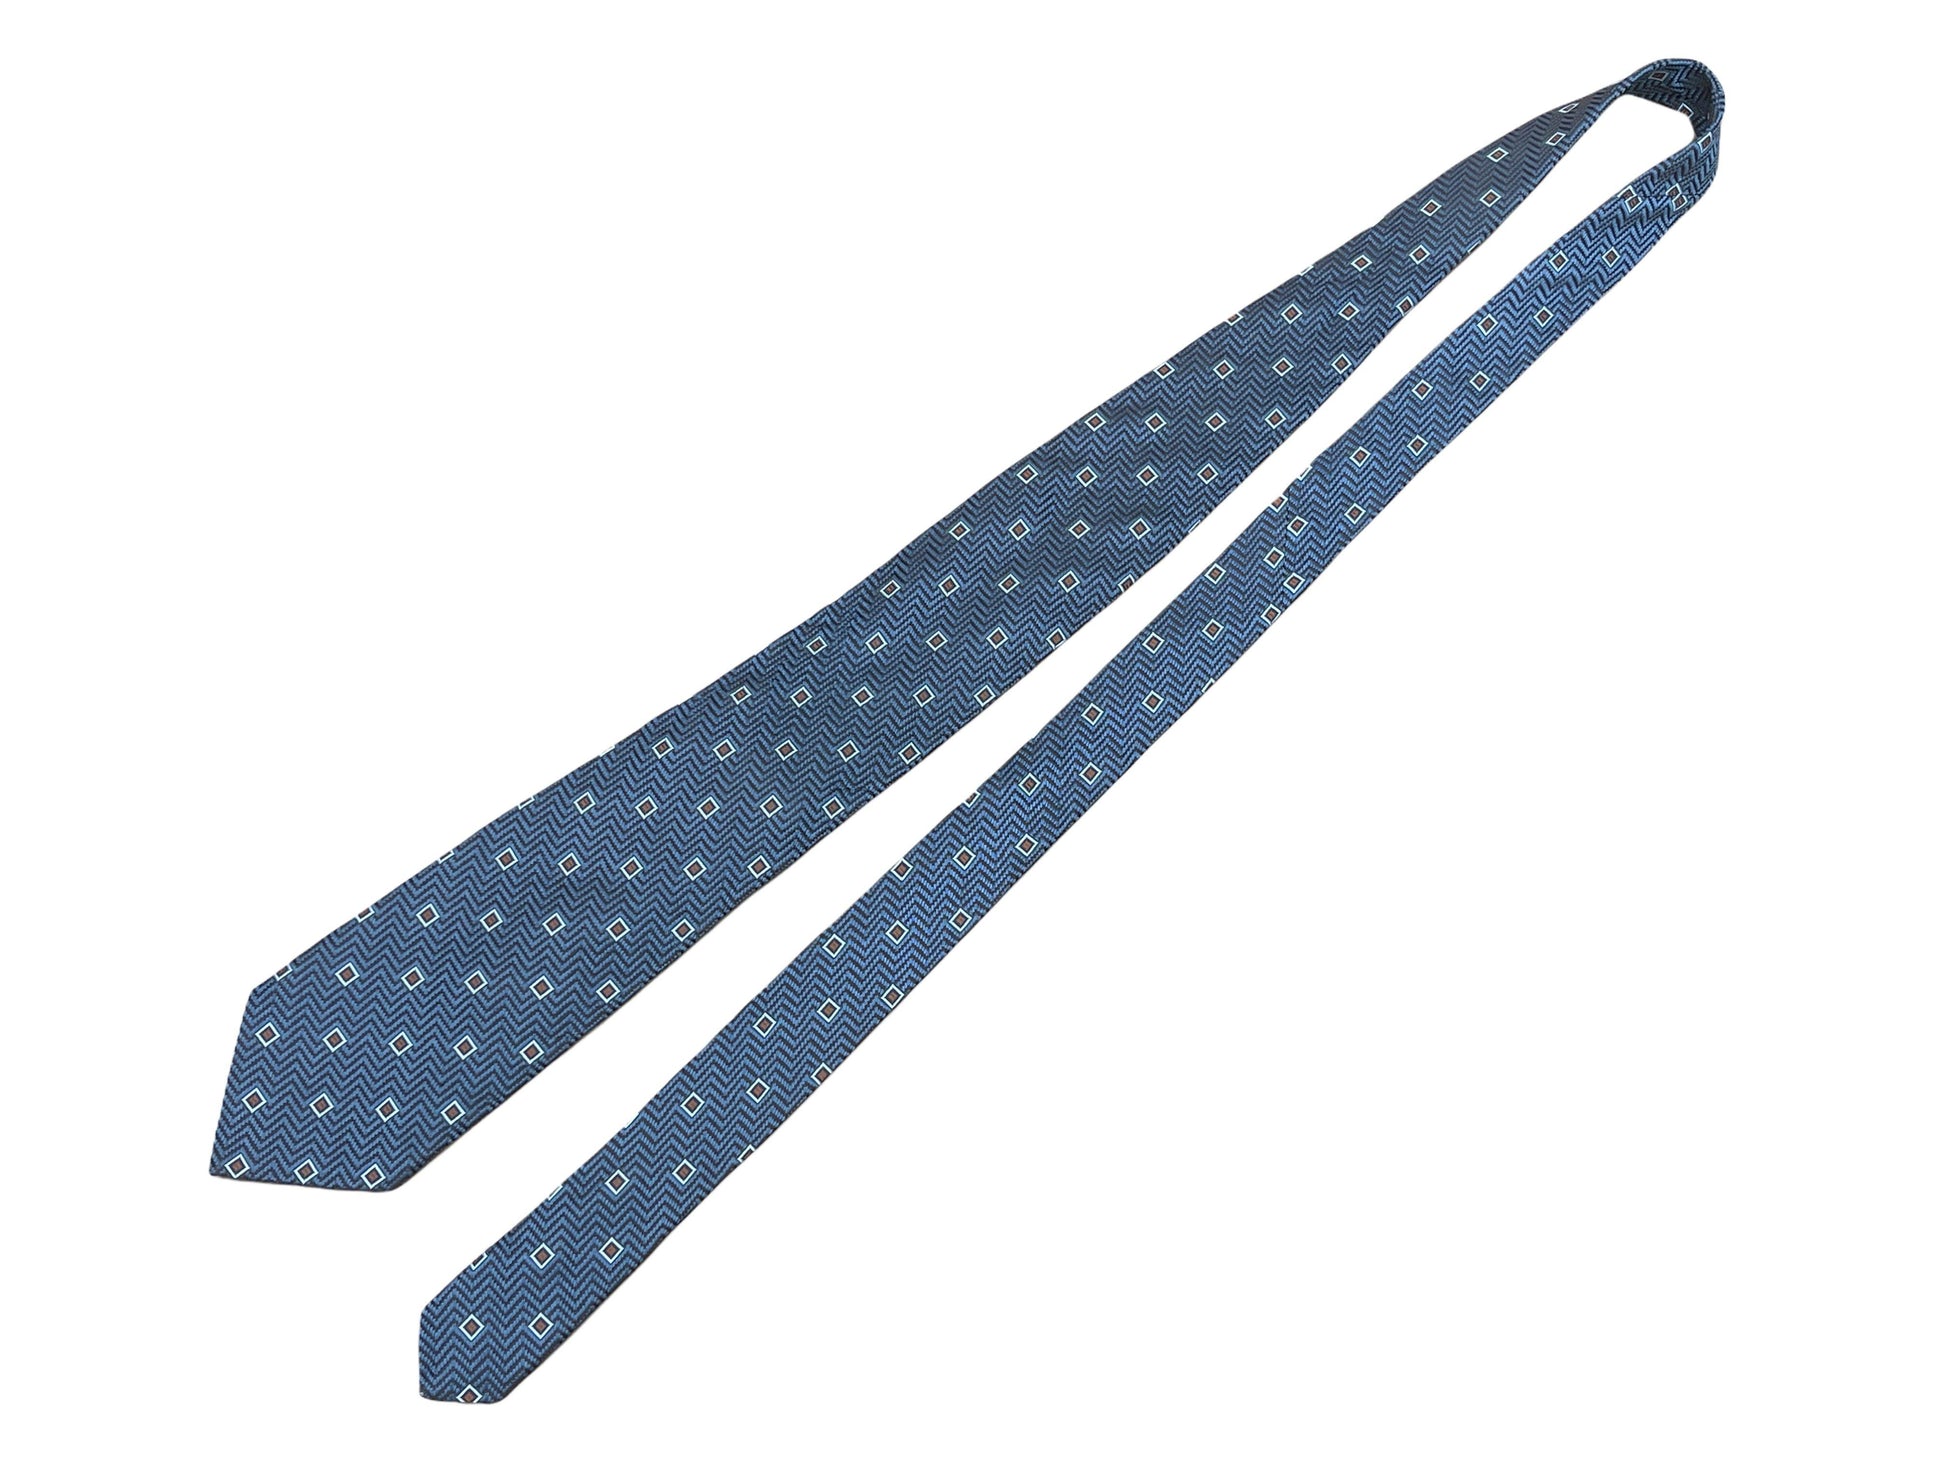 Ermenegildo Zegna dotted with herringbone blue tie - Genuine Design